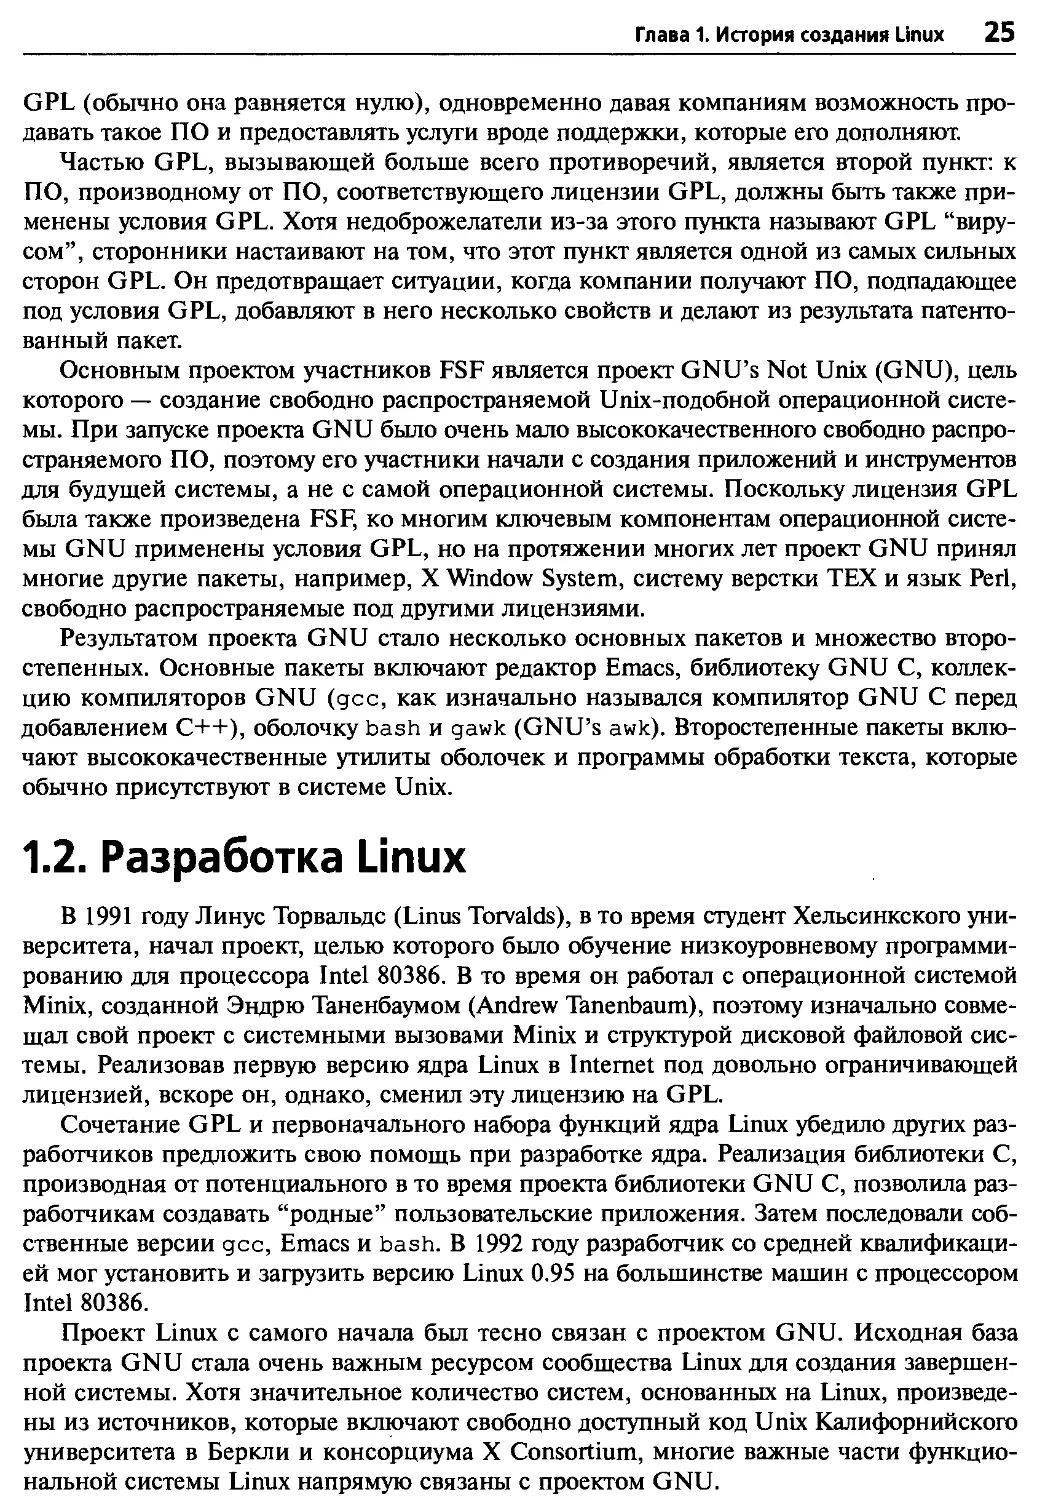 1.2. Разработка Linux